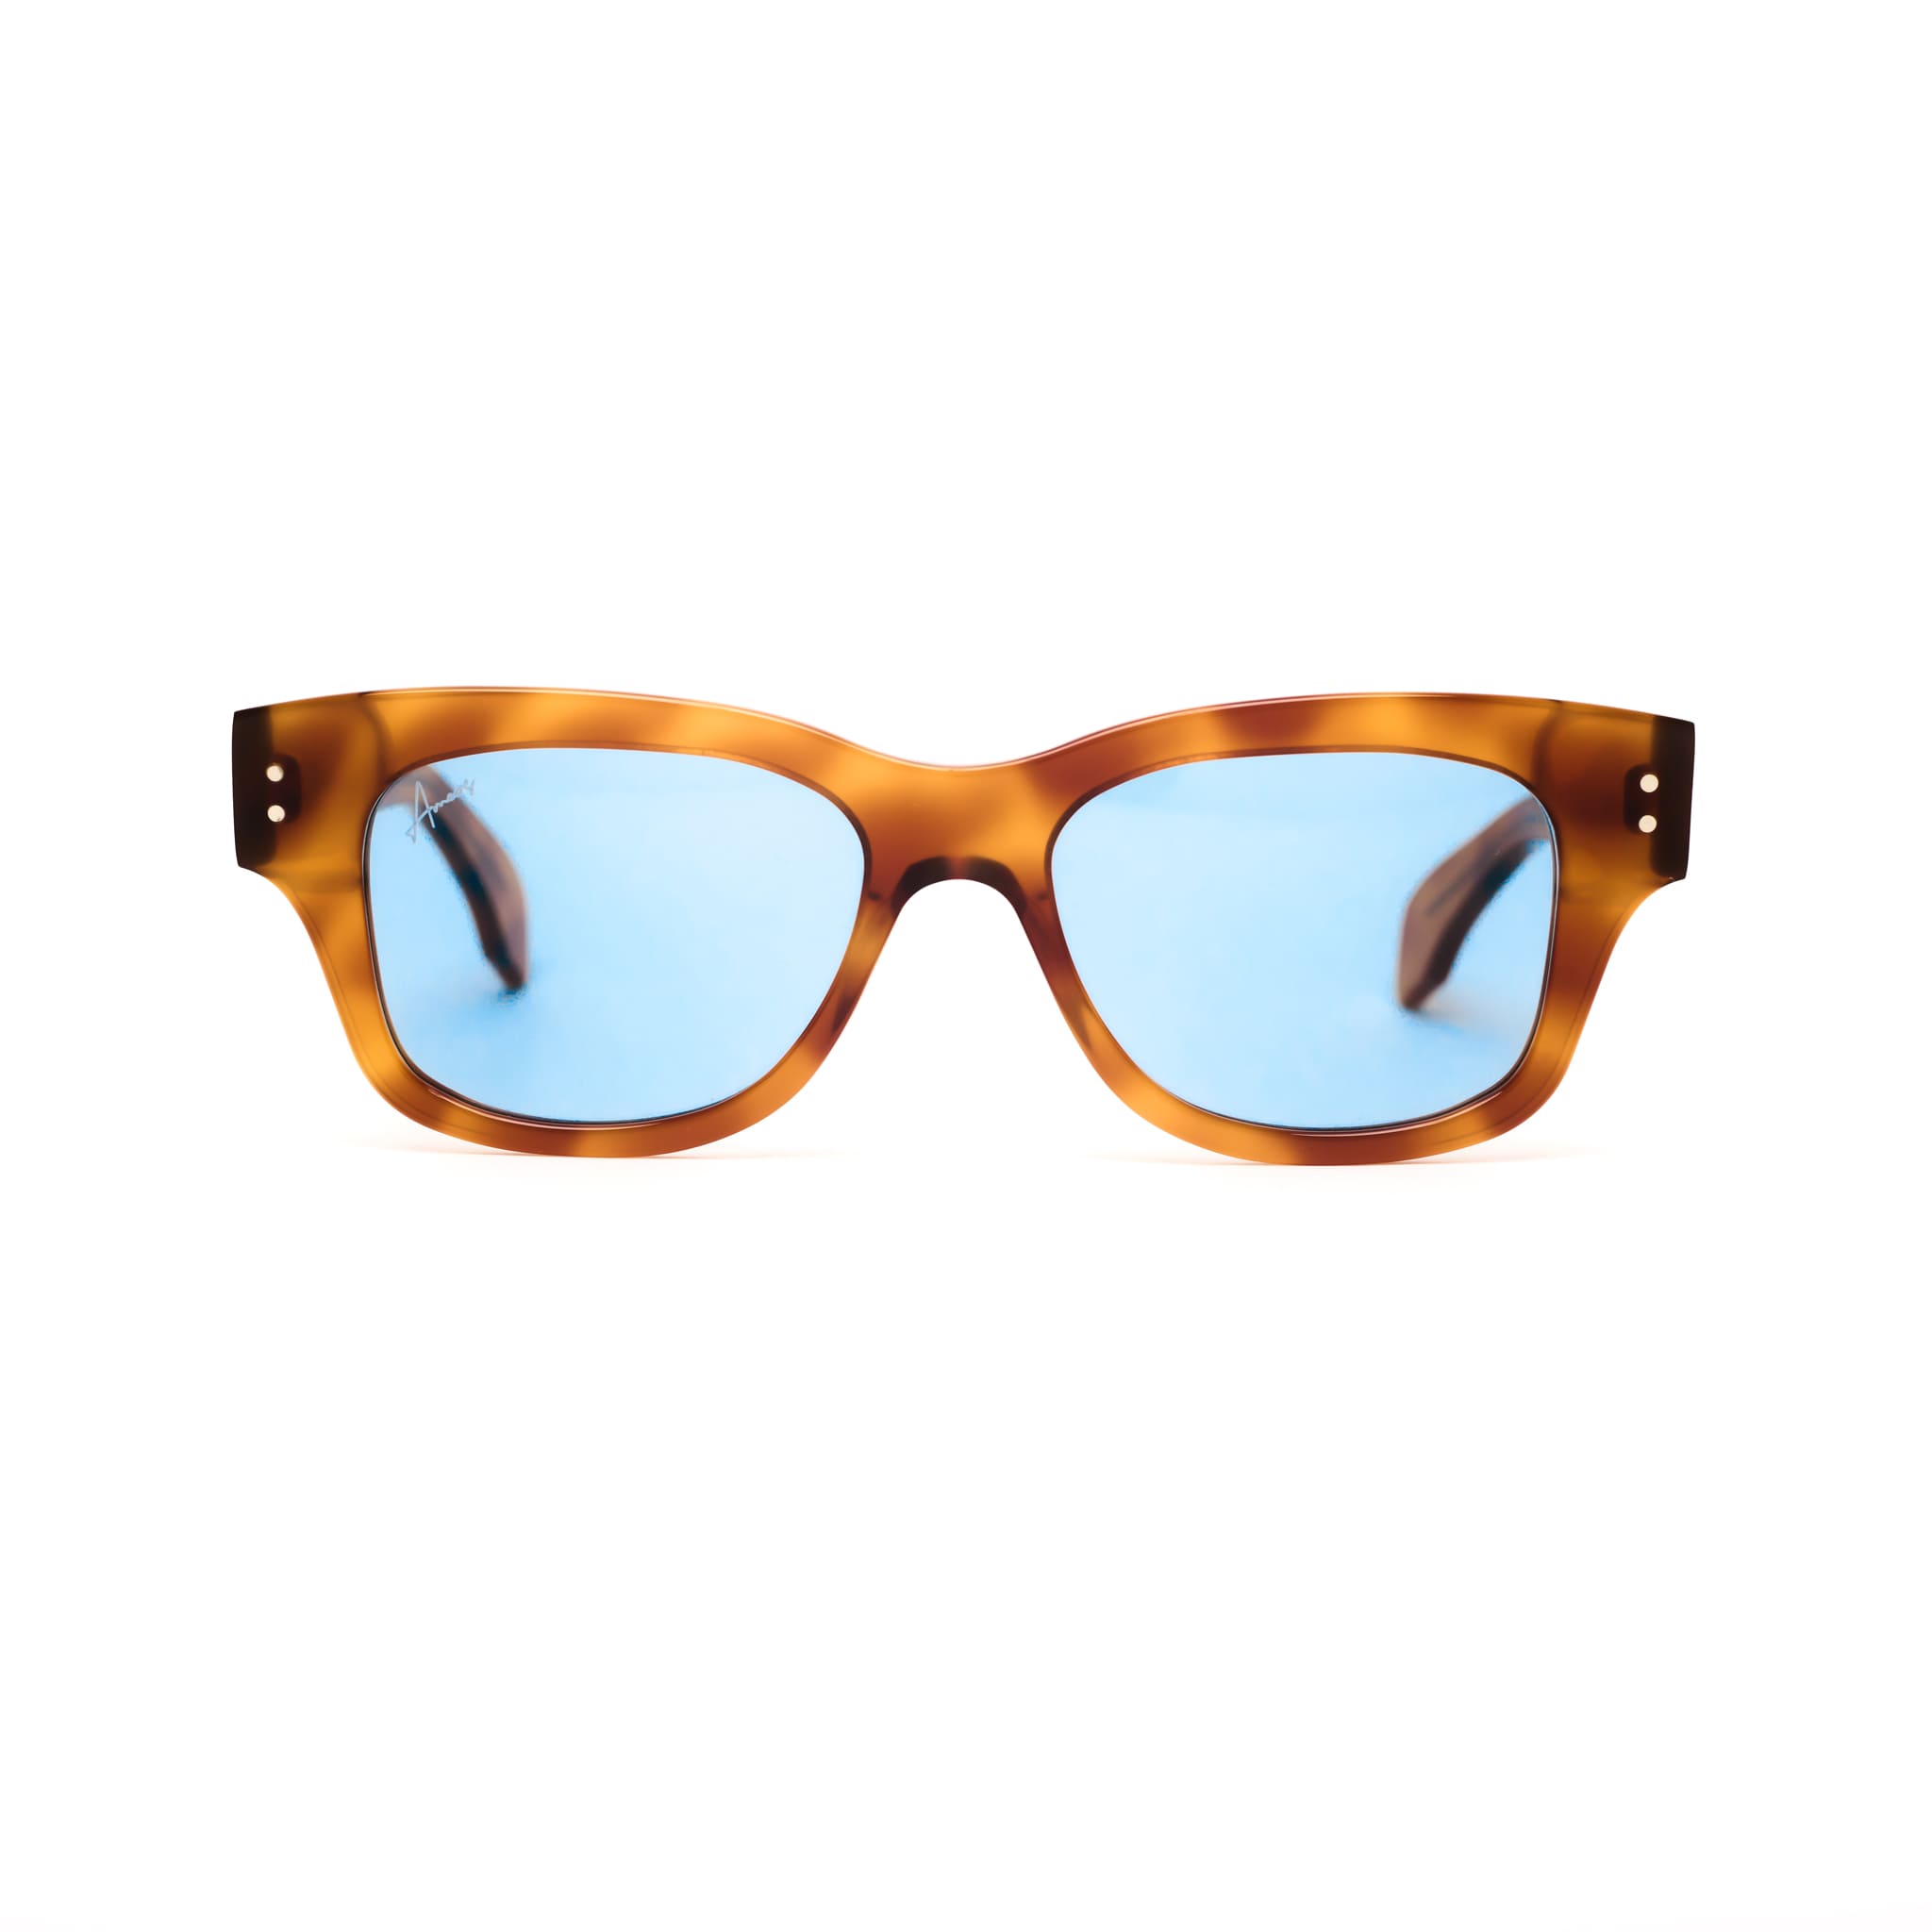 Ameos Forever collection Sam model. Tortoise frames with light blue lenses. Front view. Genderless, gender neutral eyewear